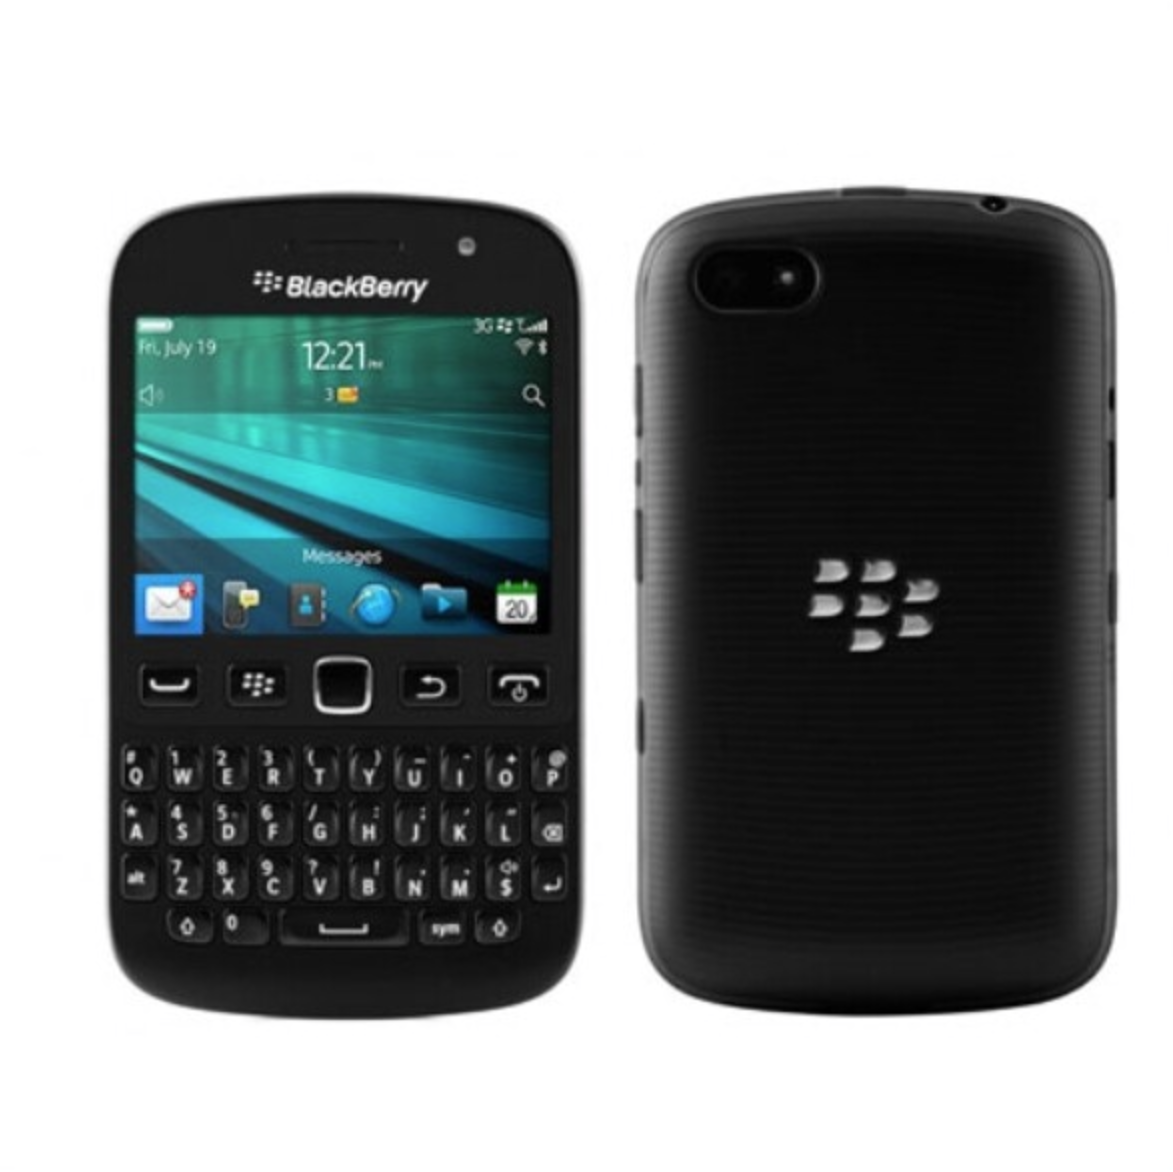 BOXED SEALED Blackberry 9720 512MB UNLOCKED